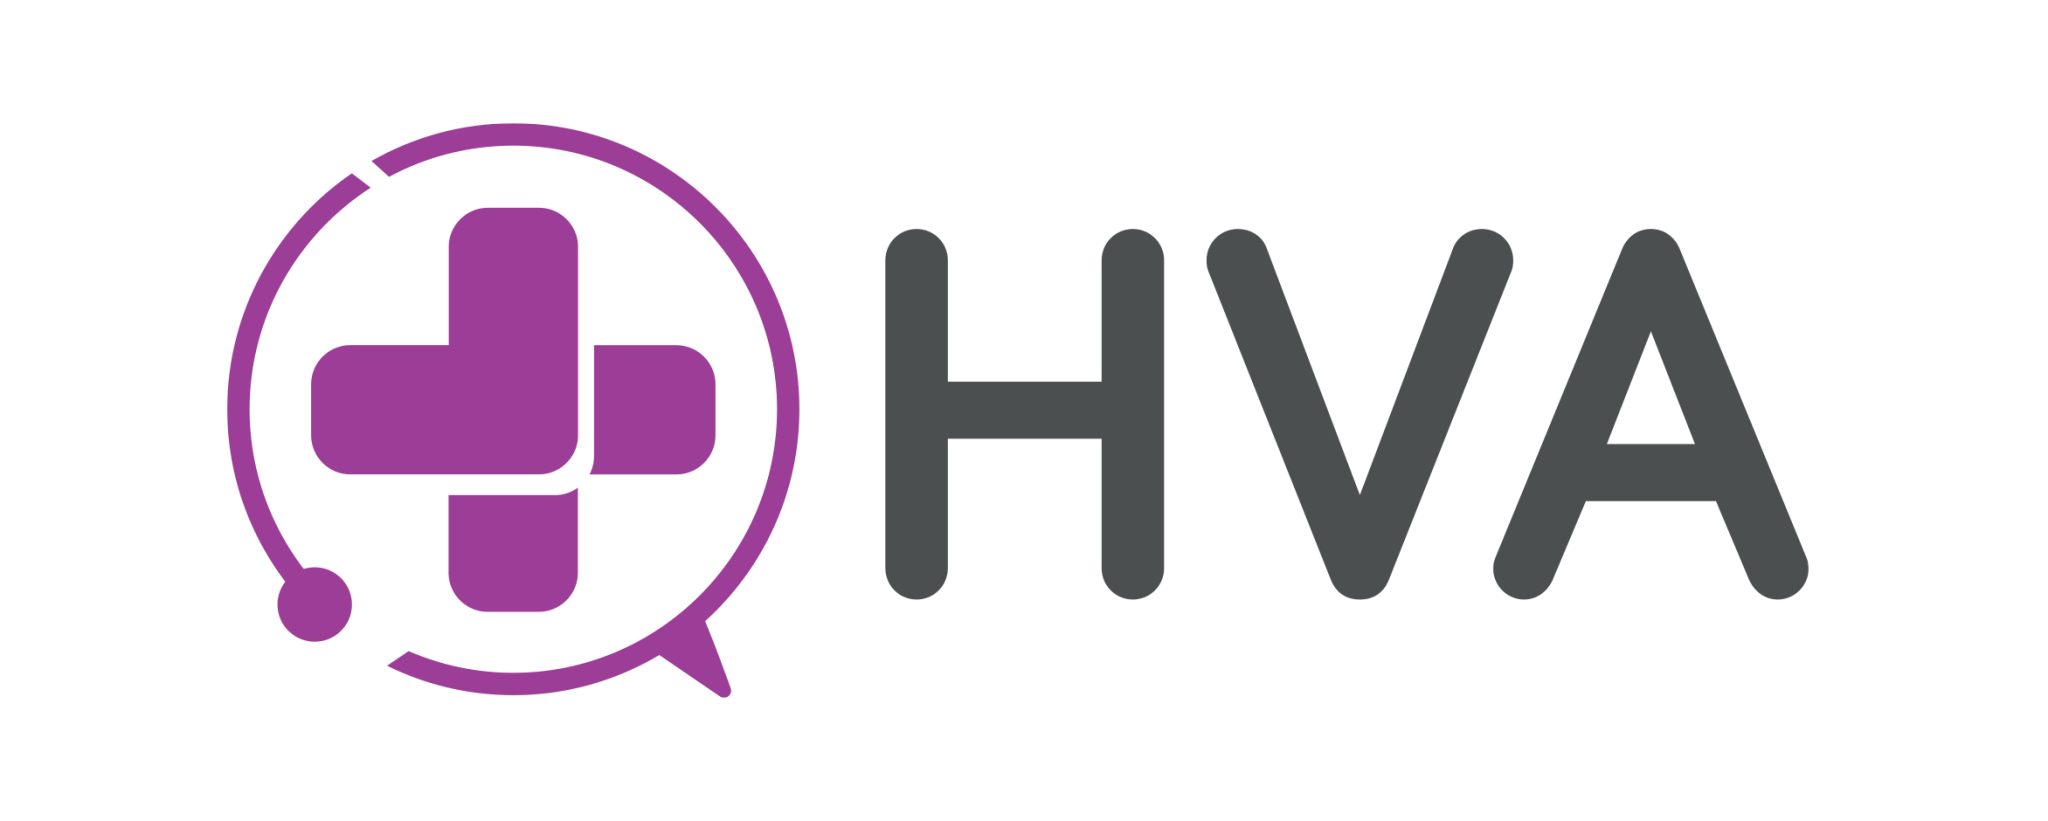 HVA-Logo